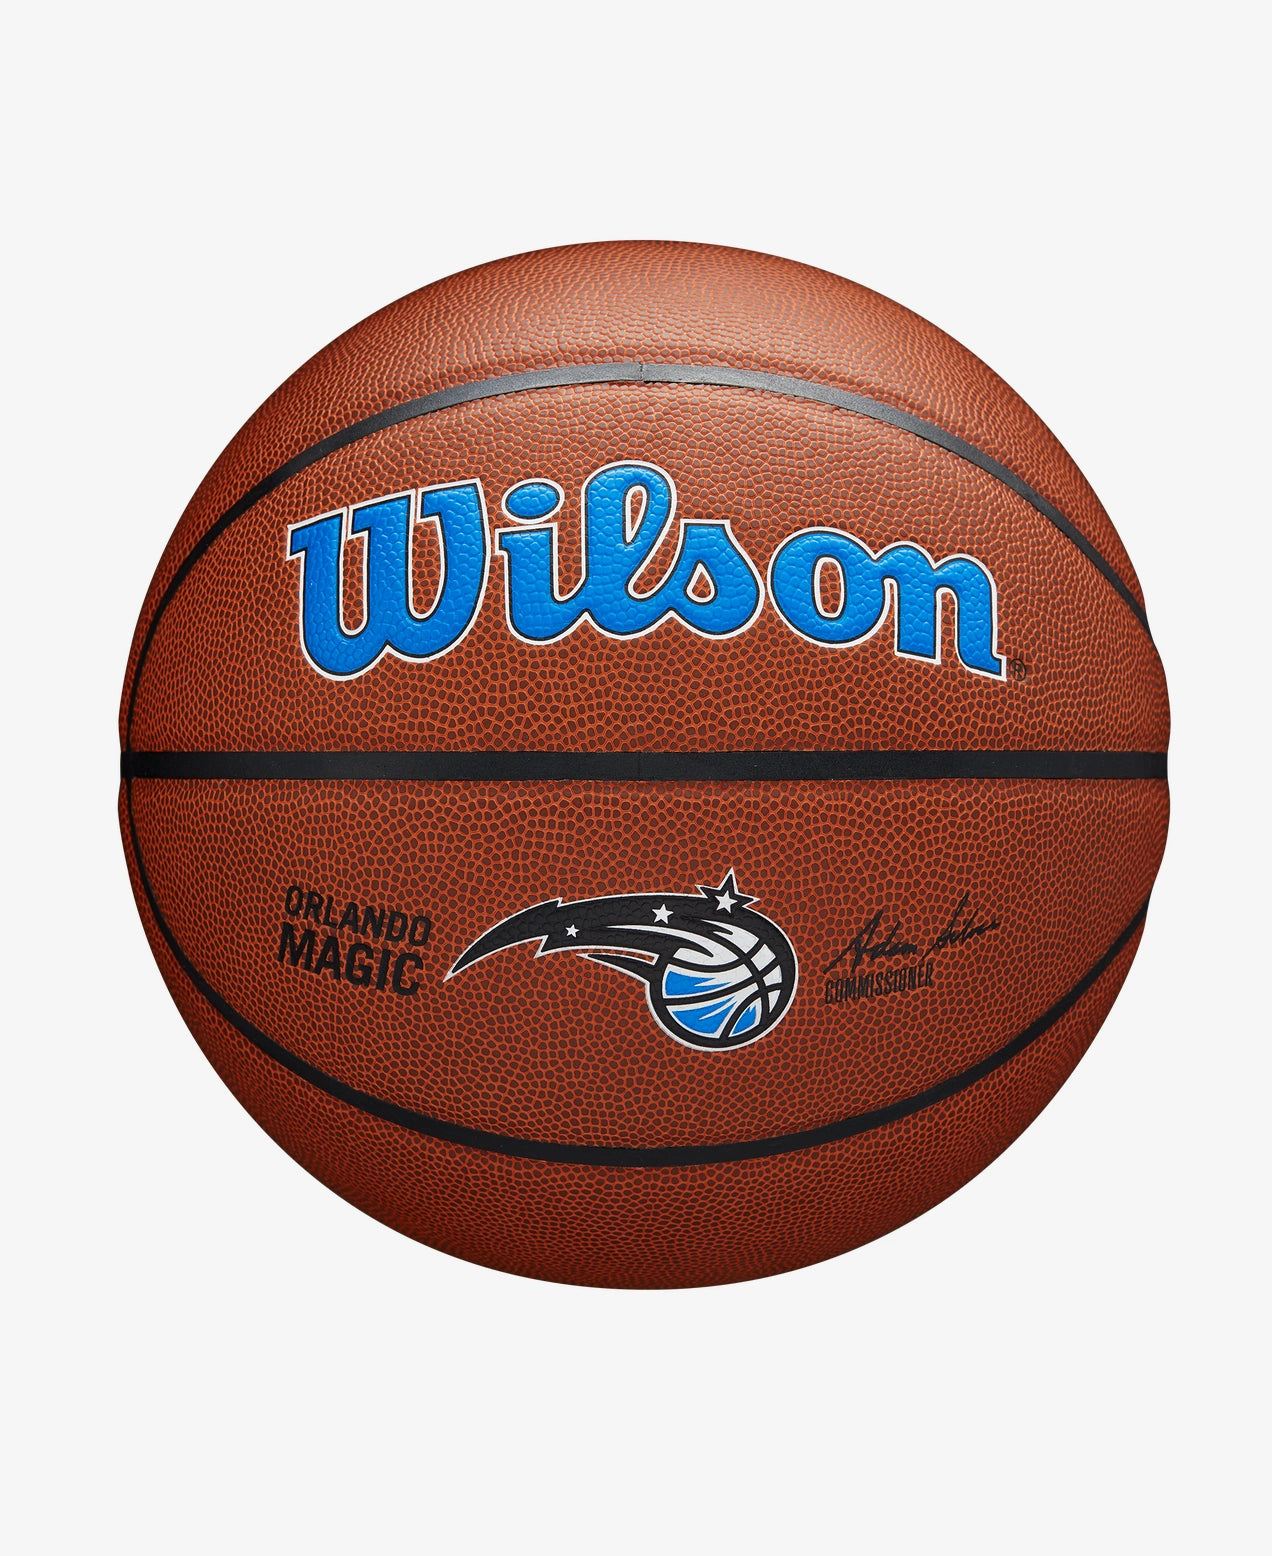 Orlando Magic - Wilson Team Alliance Basketball